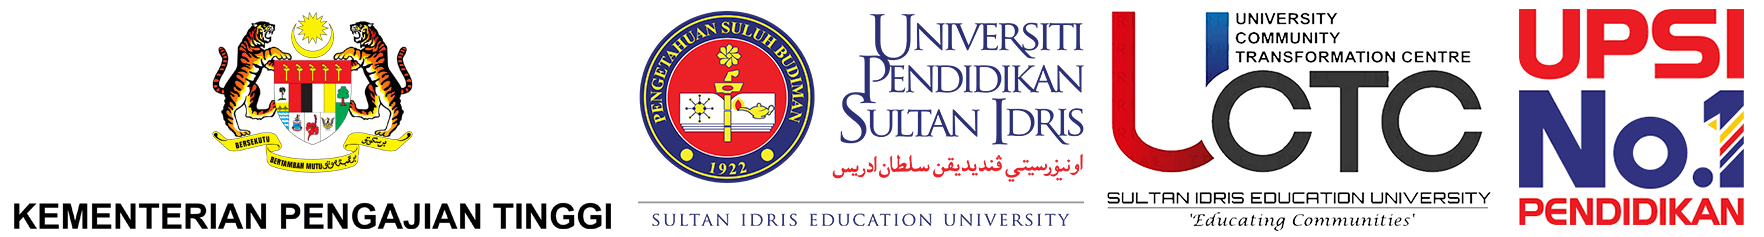 UPSI | Pusat Transformasi Komuniti Universiti